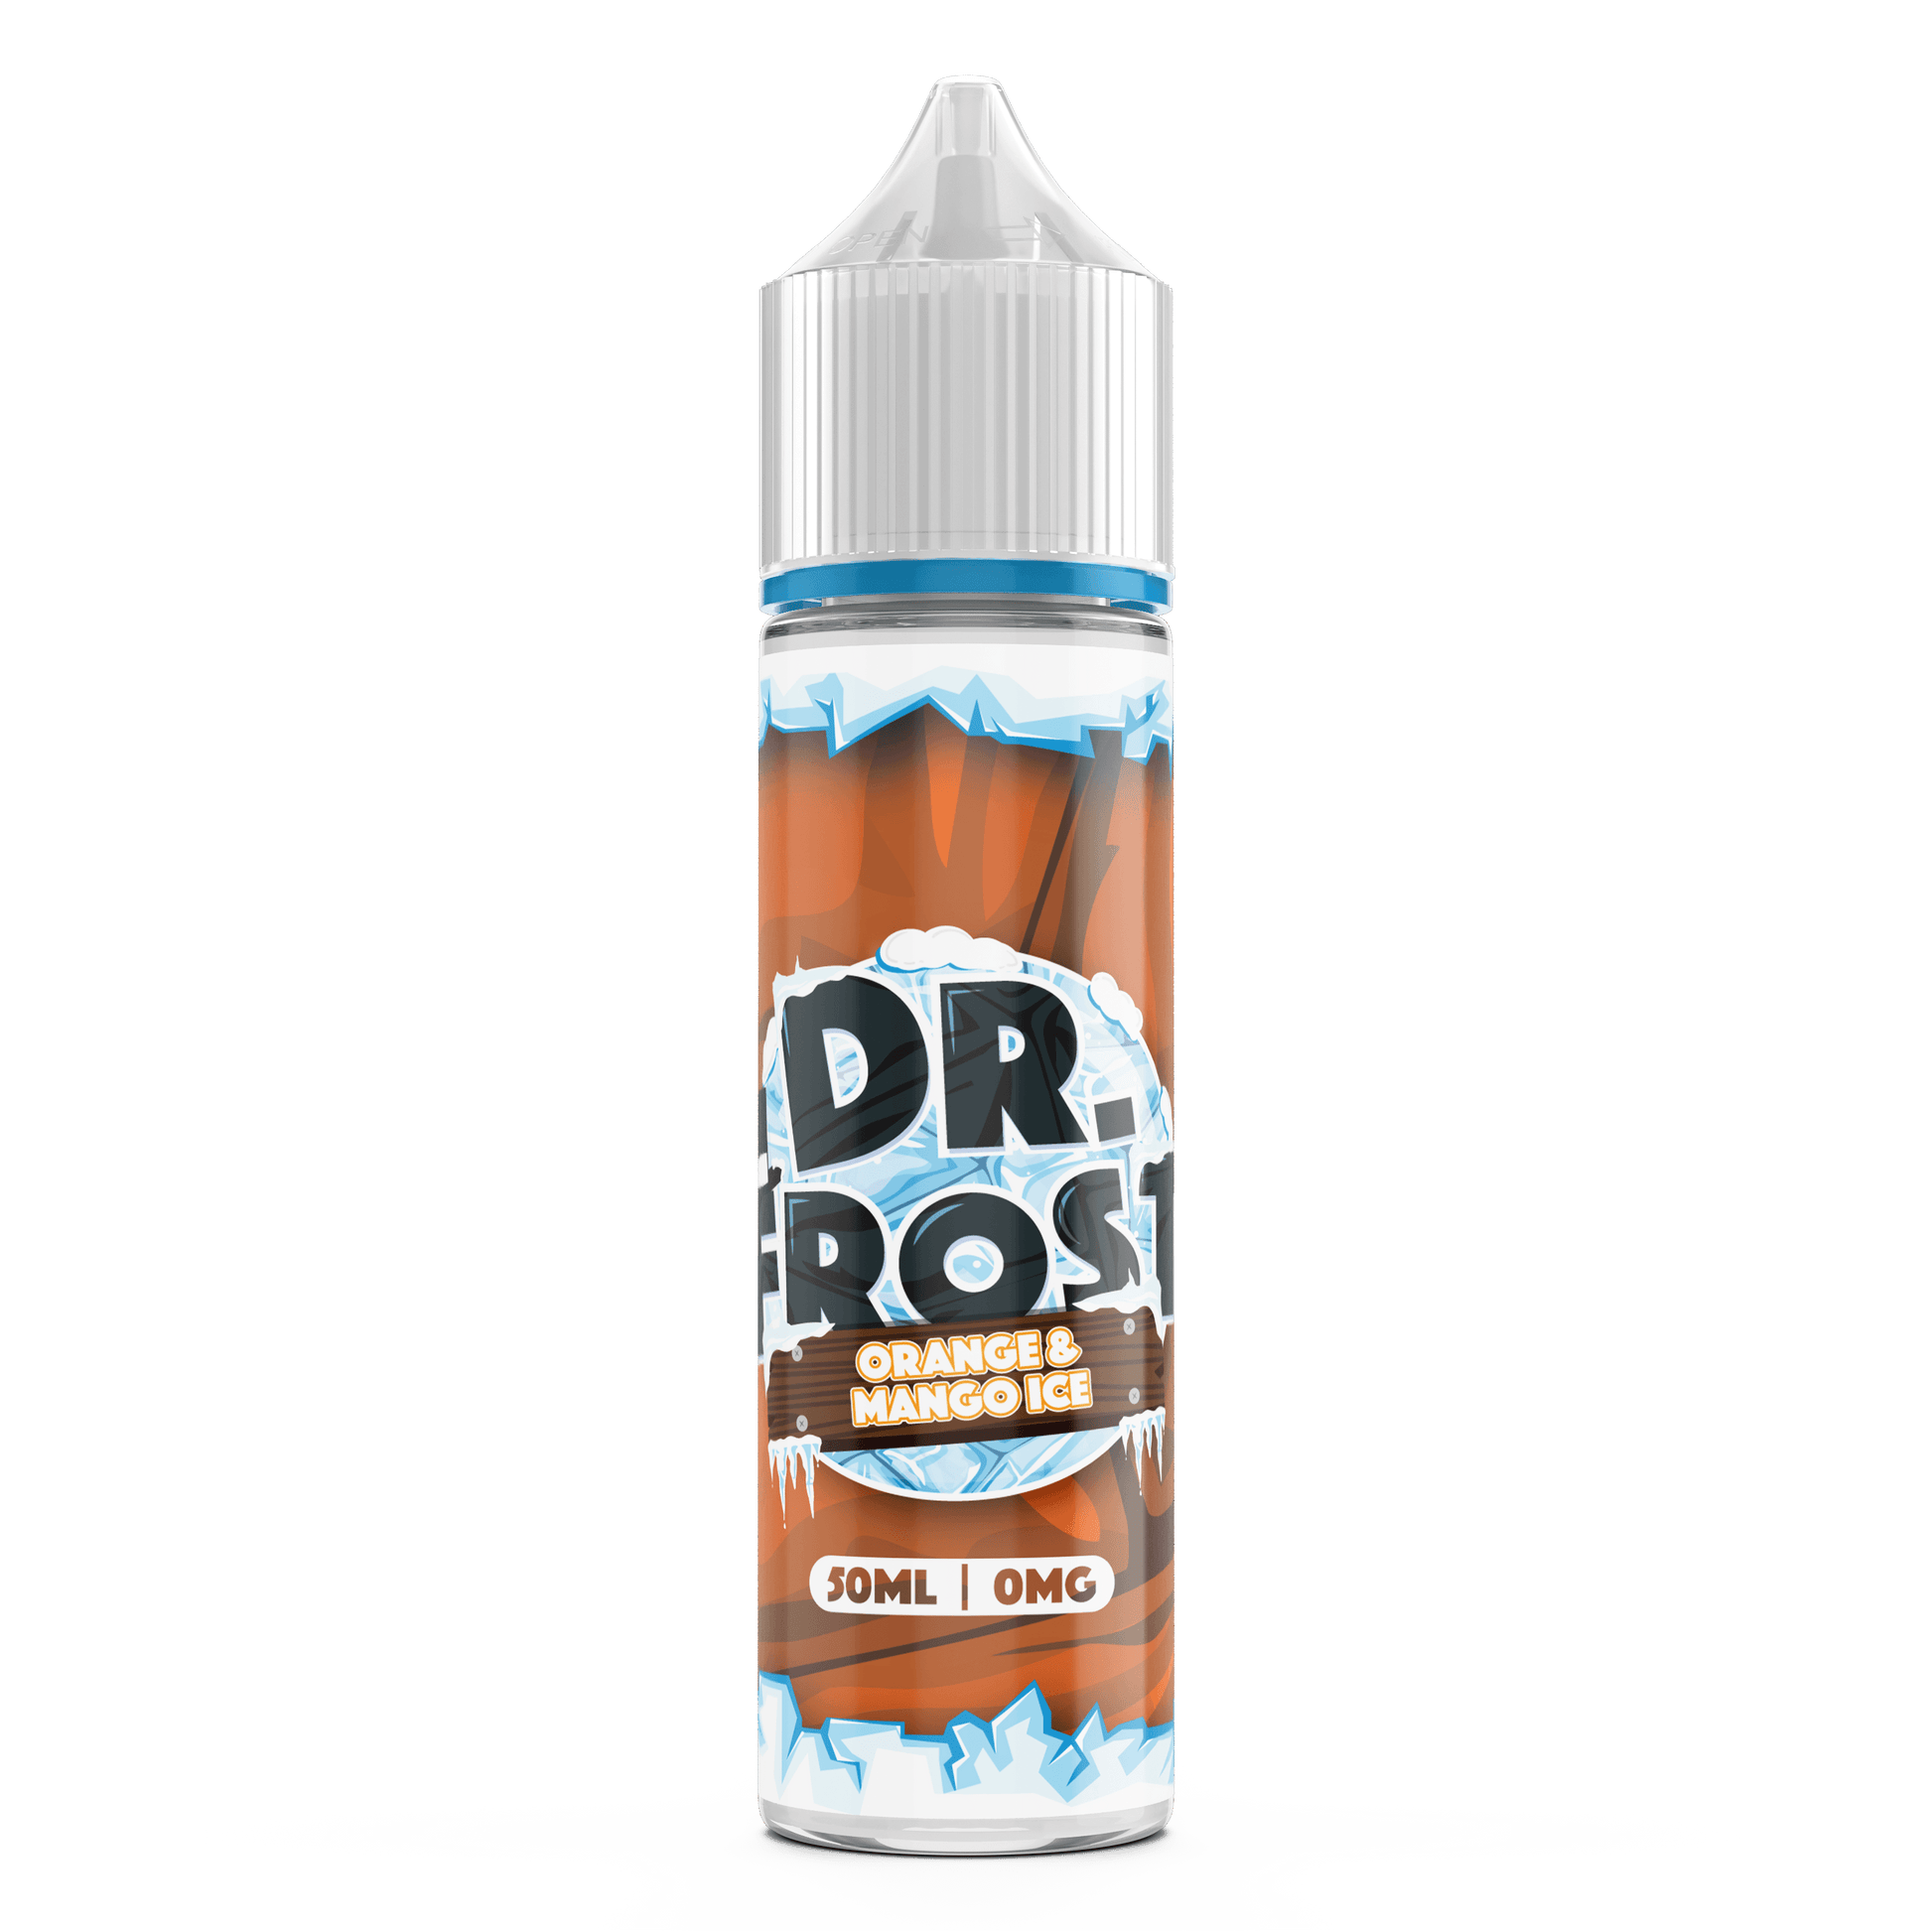 Dr.Frost - Orange & Mango Ice 50ml - Vaper Aid